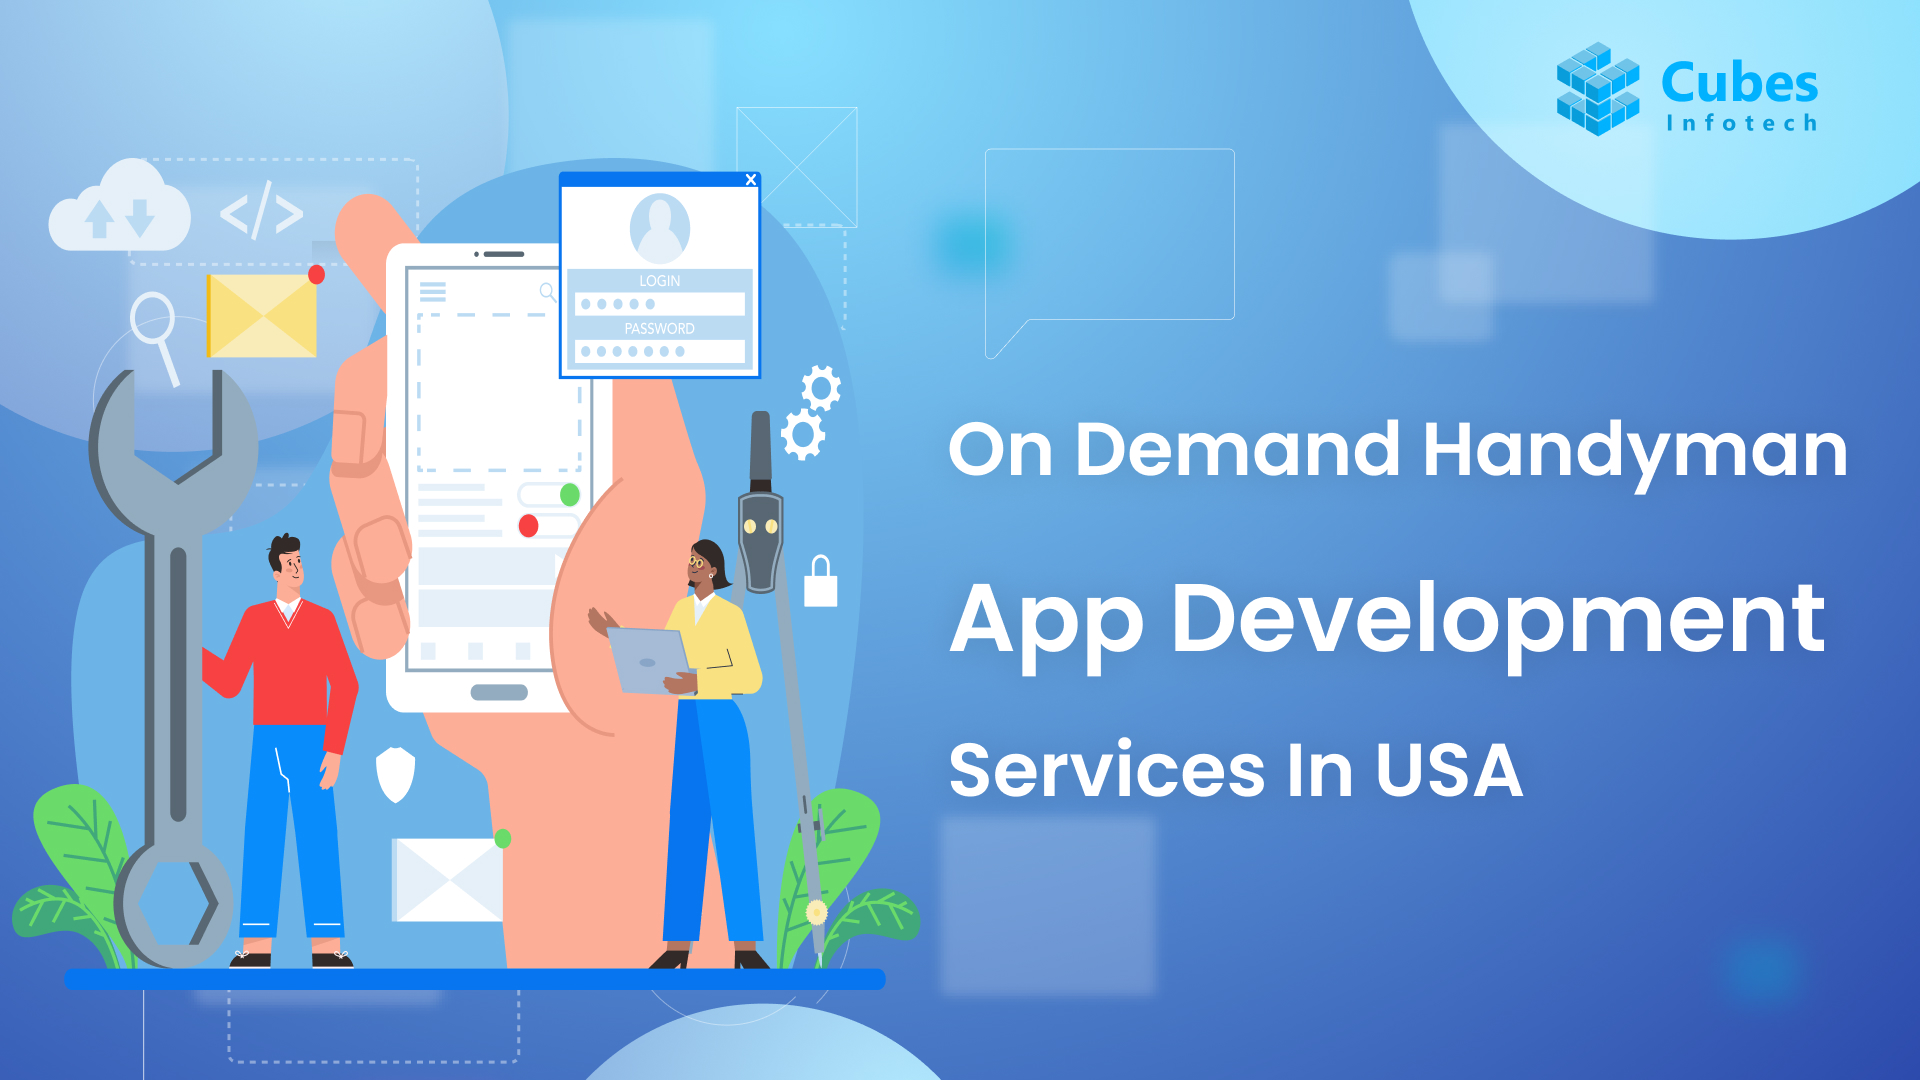 On Demand Handyman App Development Services In USA